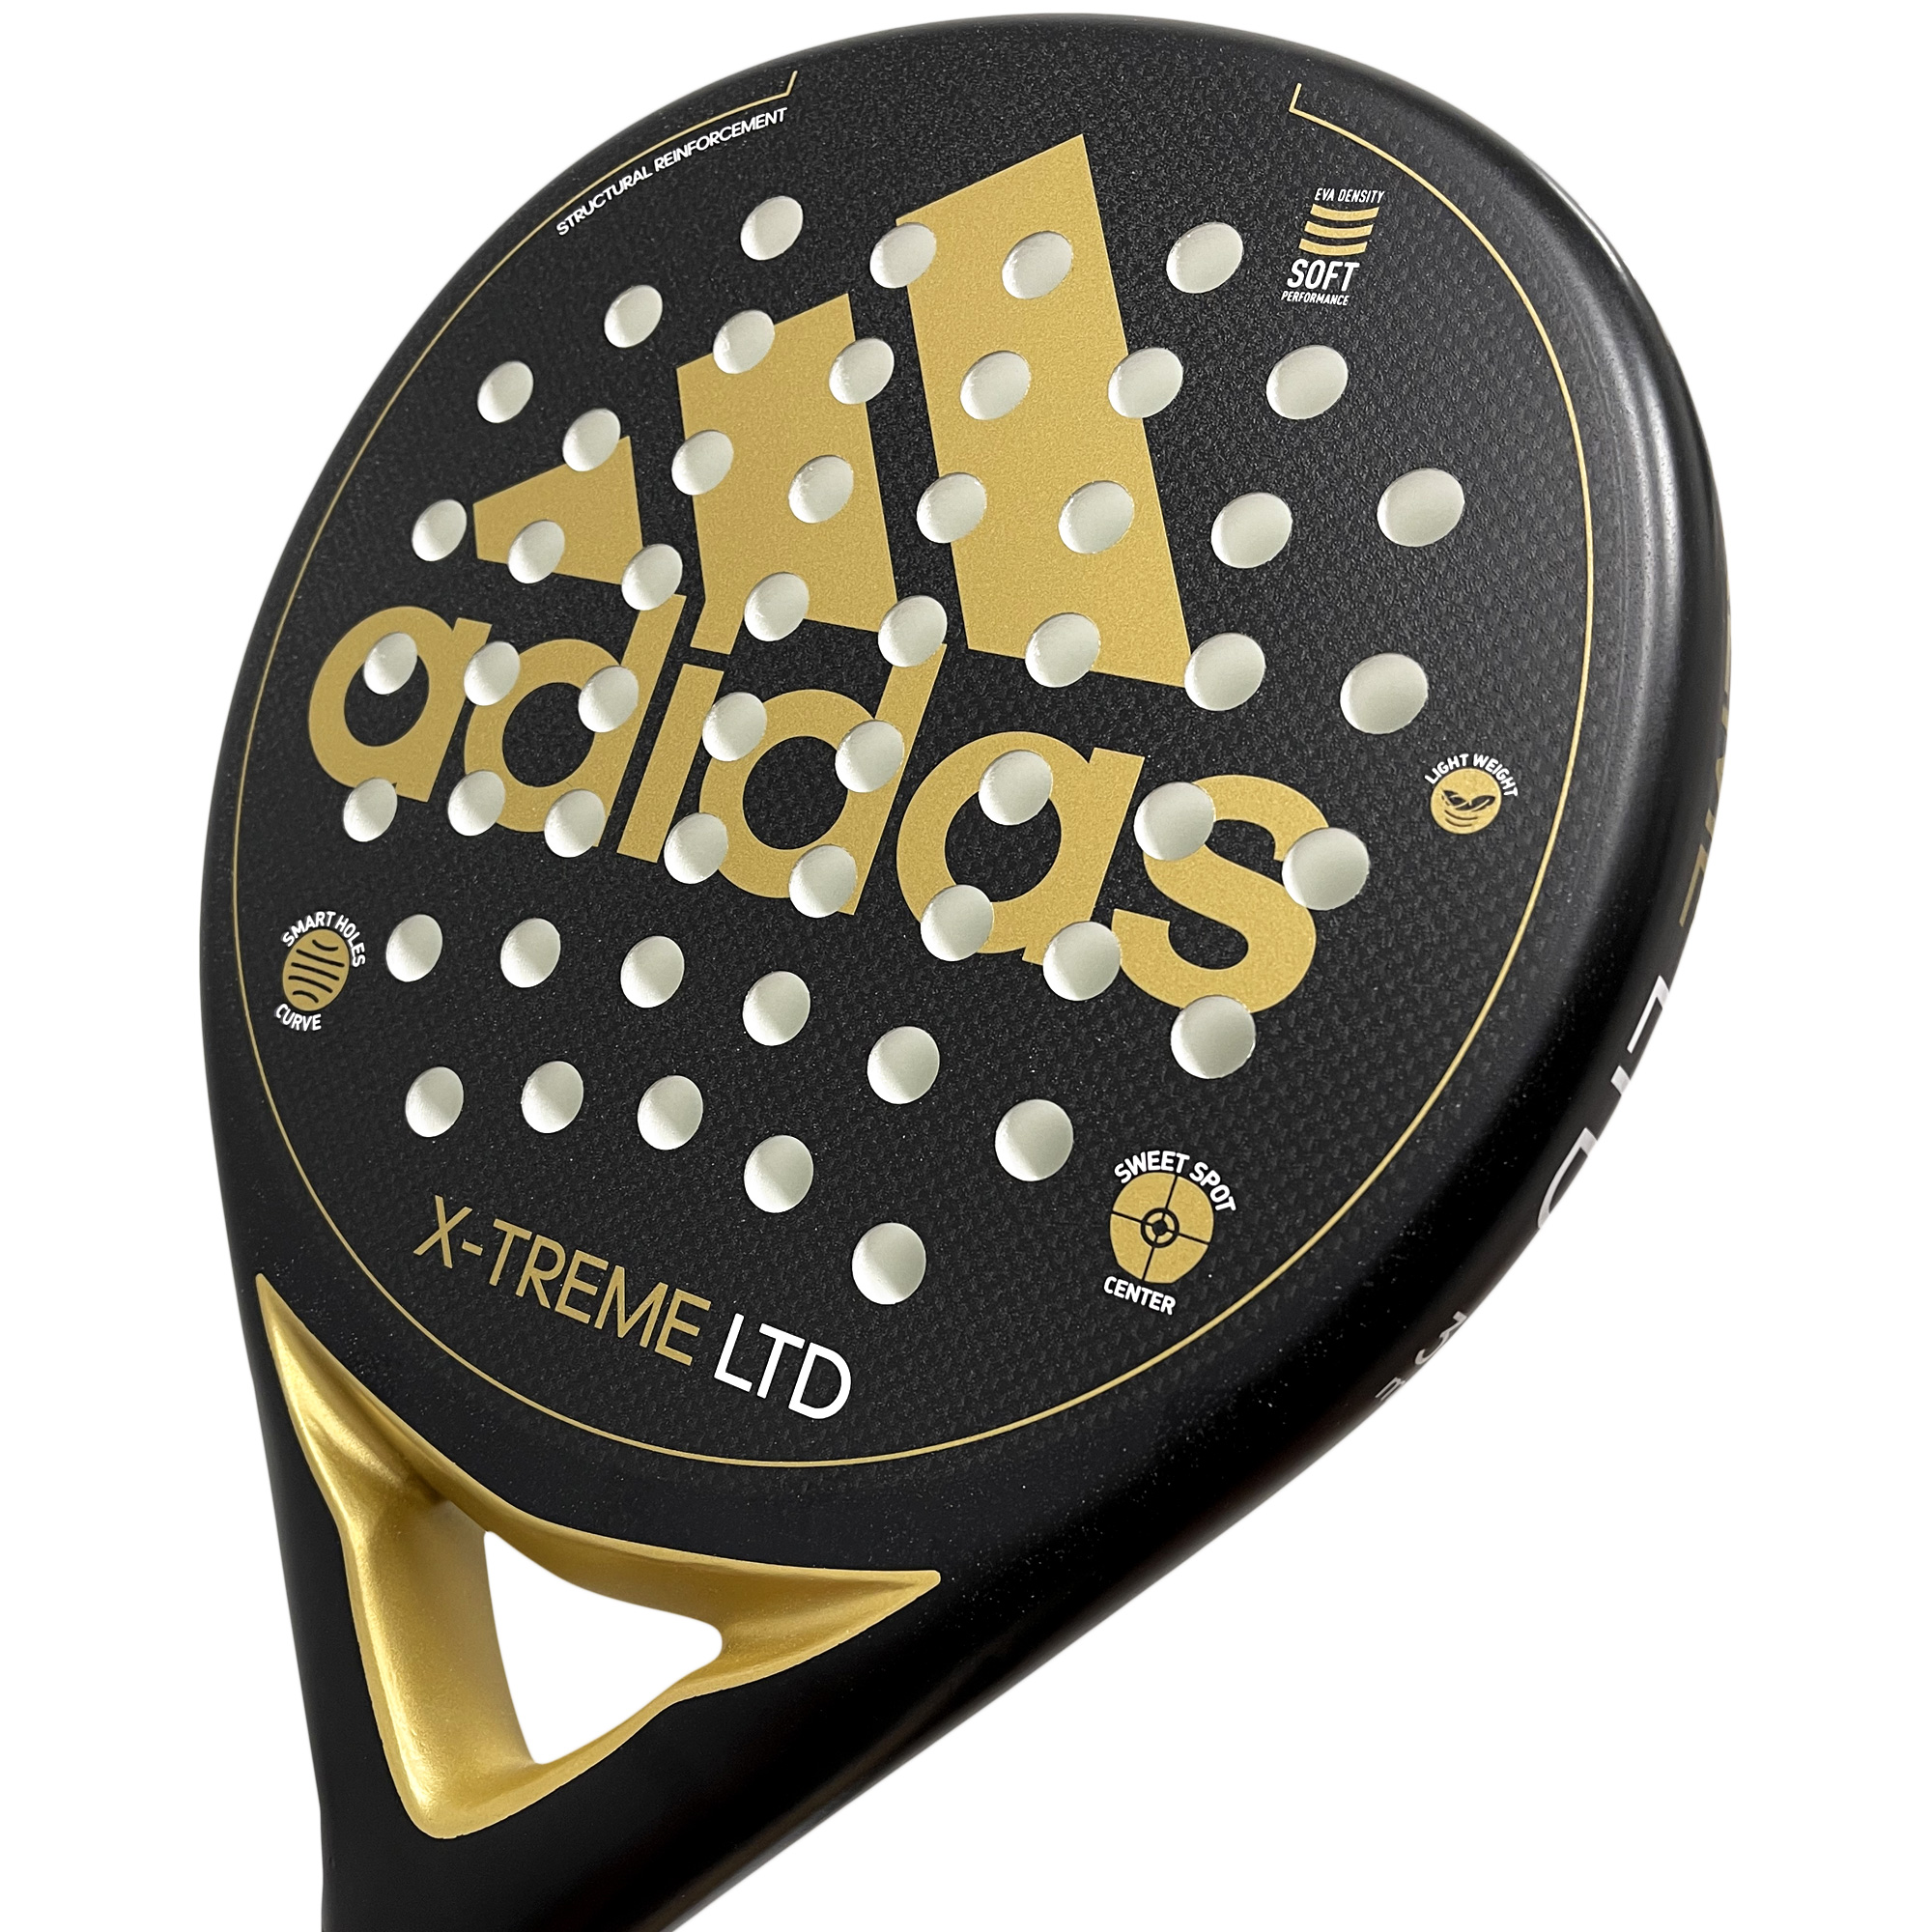 Pala adidas X-treme Ltd Black & Gold